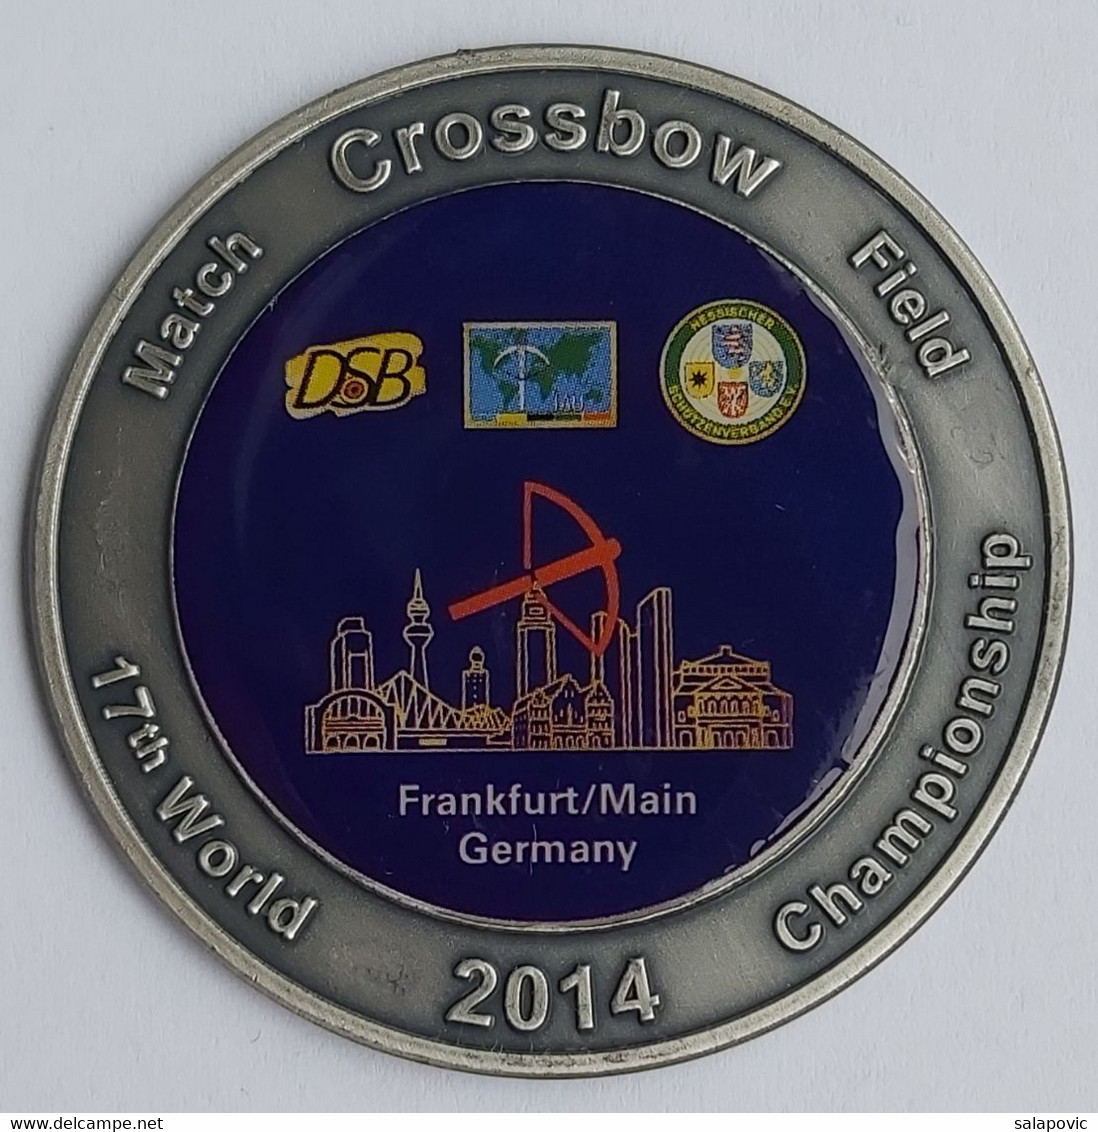 Match Crossbow Field 17th World Championship 2014 Frankfurt Germany Shooting Archery MEDAL PINS BADGES A5/4 - Tiro Al Arco